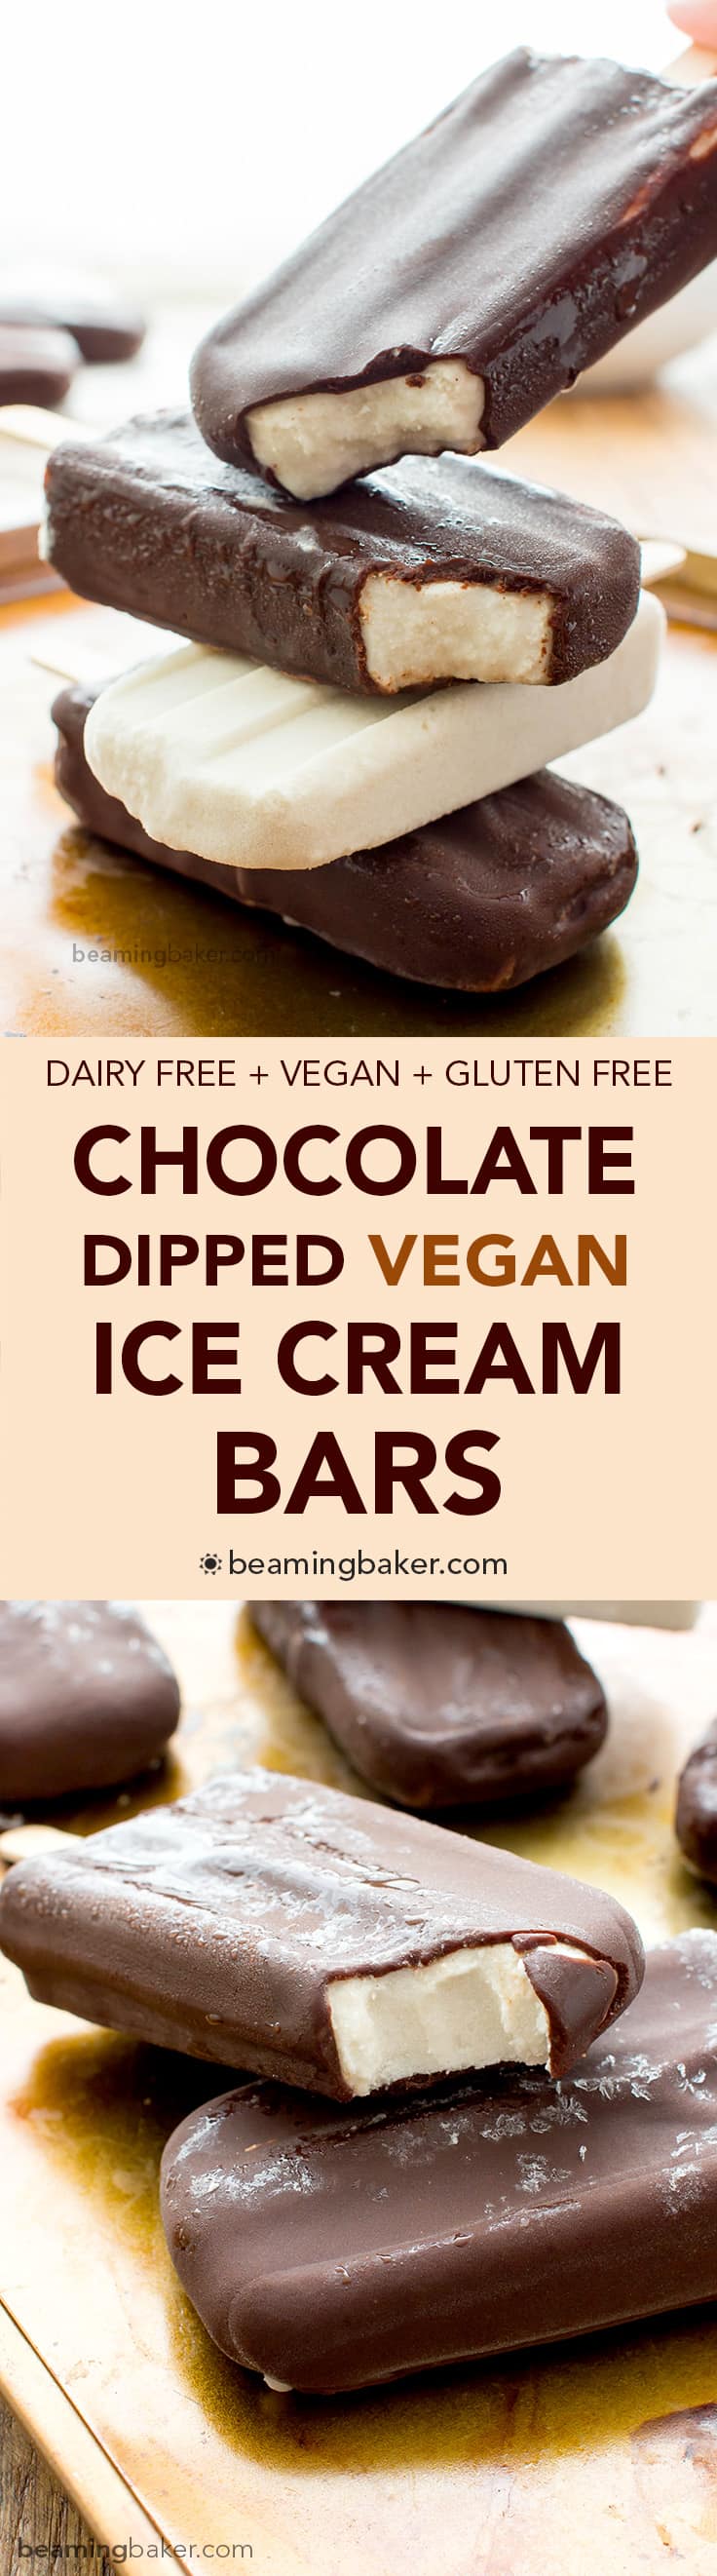 Vegan Ice Cream Bars (V+GF): an 8 ingredient recipe for the BEST decadent chocolate-dipped vegan ice cream bars made with whole ingredients. #Vegan #DairyFree #Paleo #GlutenFree | BeamingBaker.com